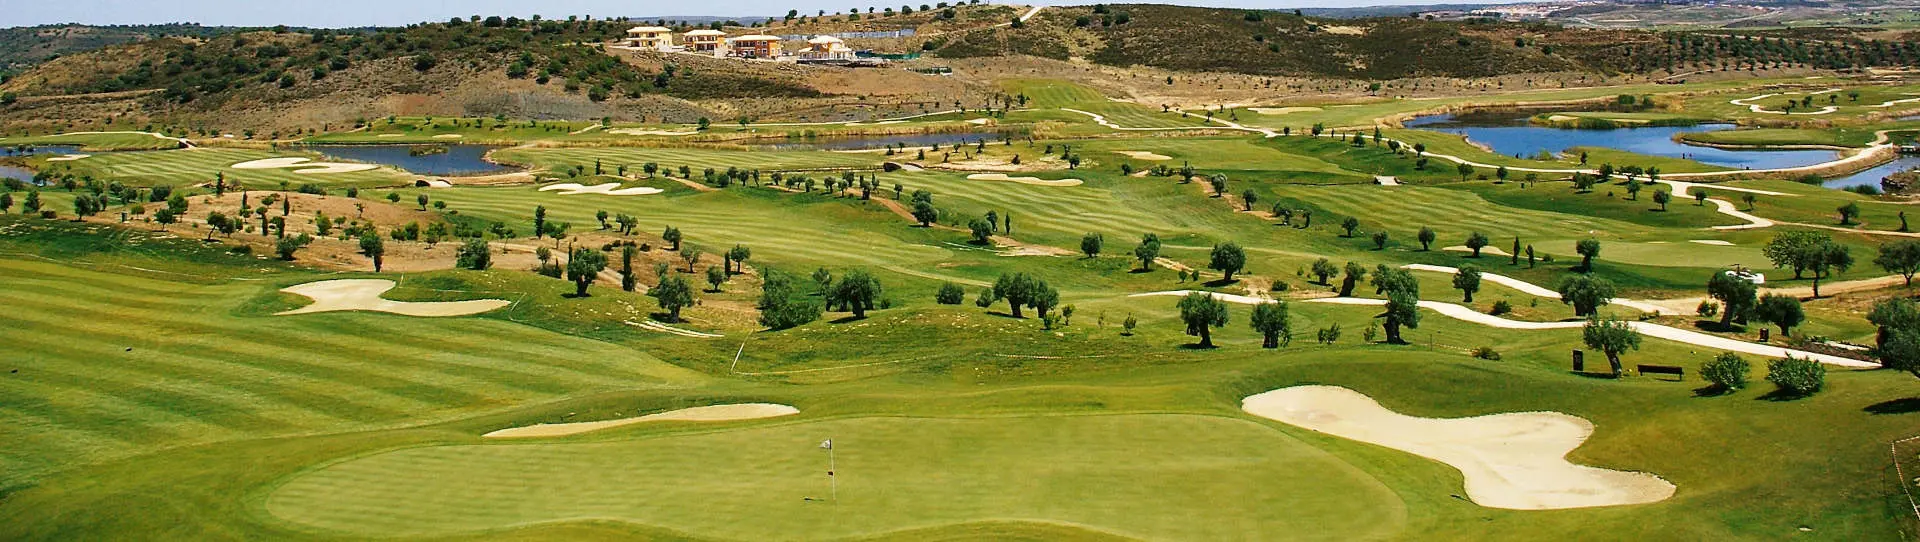 Portugal golf courses - Quinta do Vale Golf Course - Photo 1